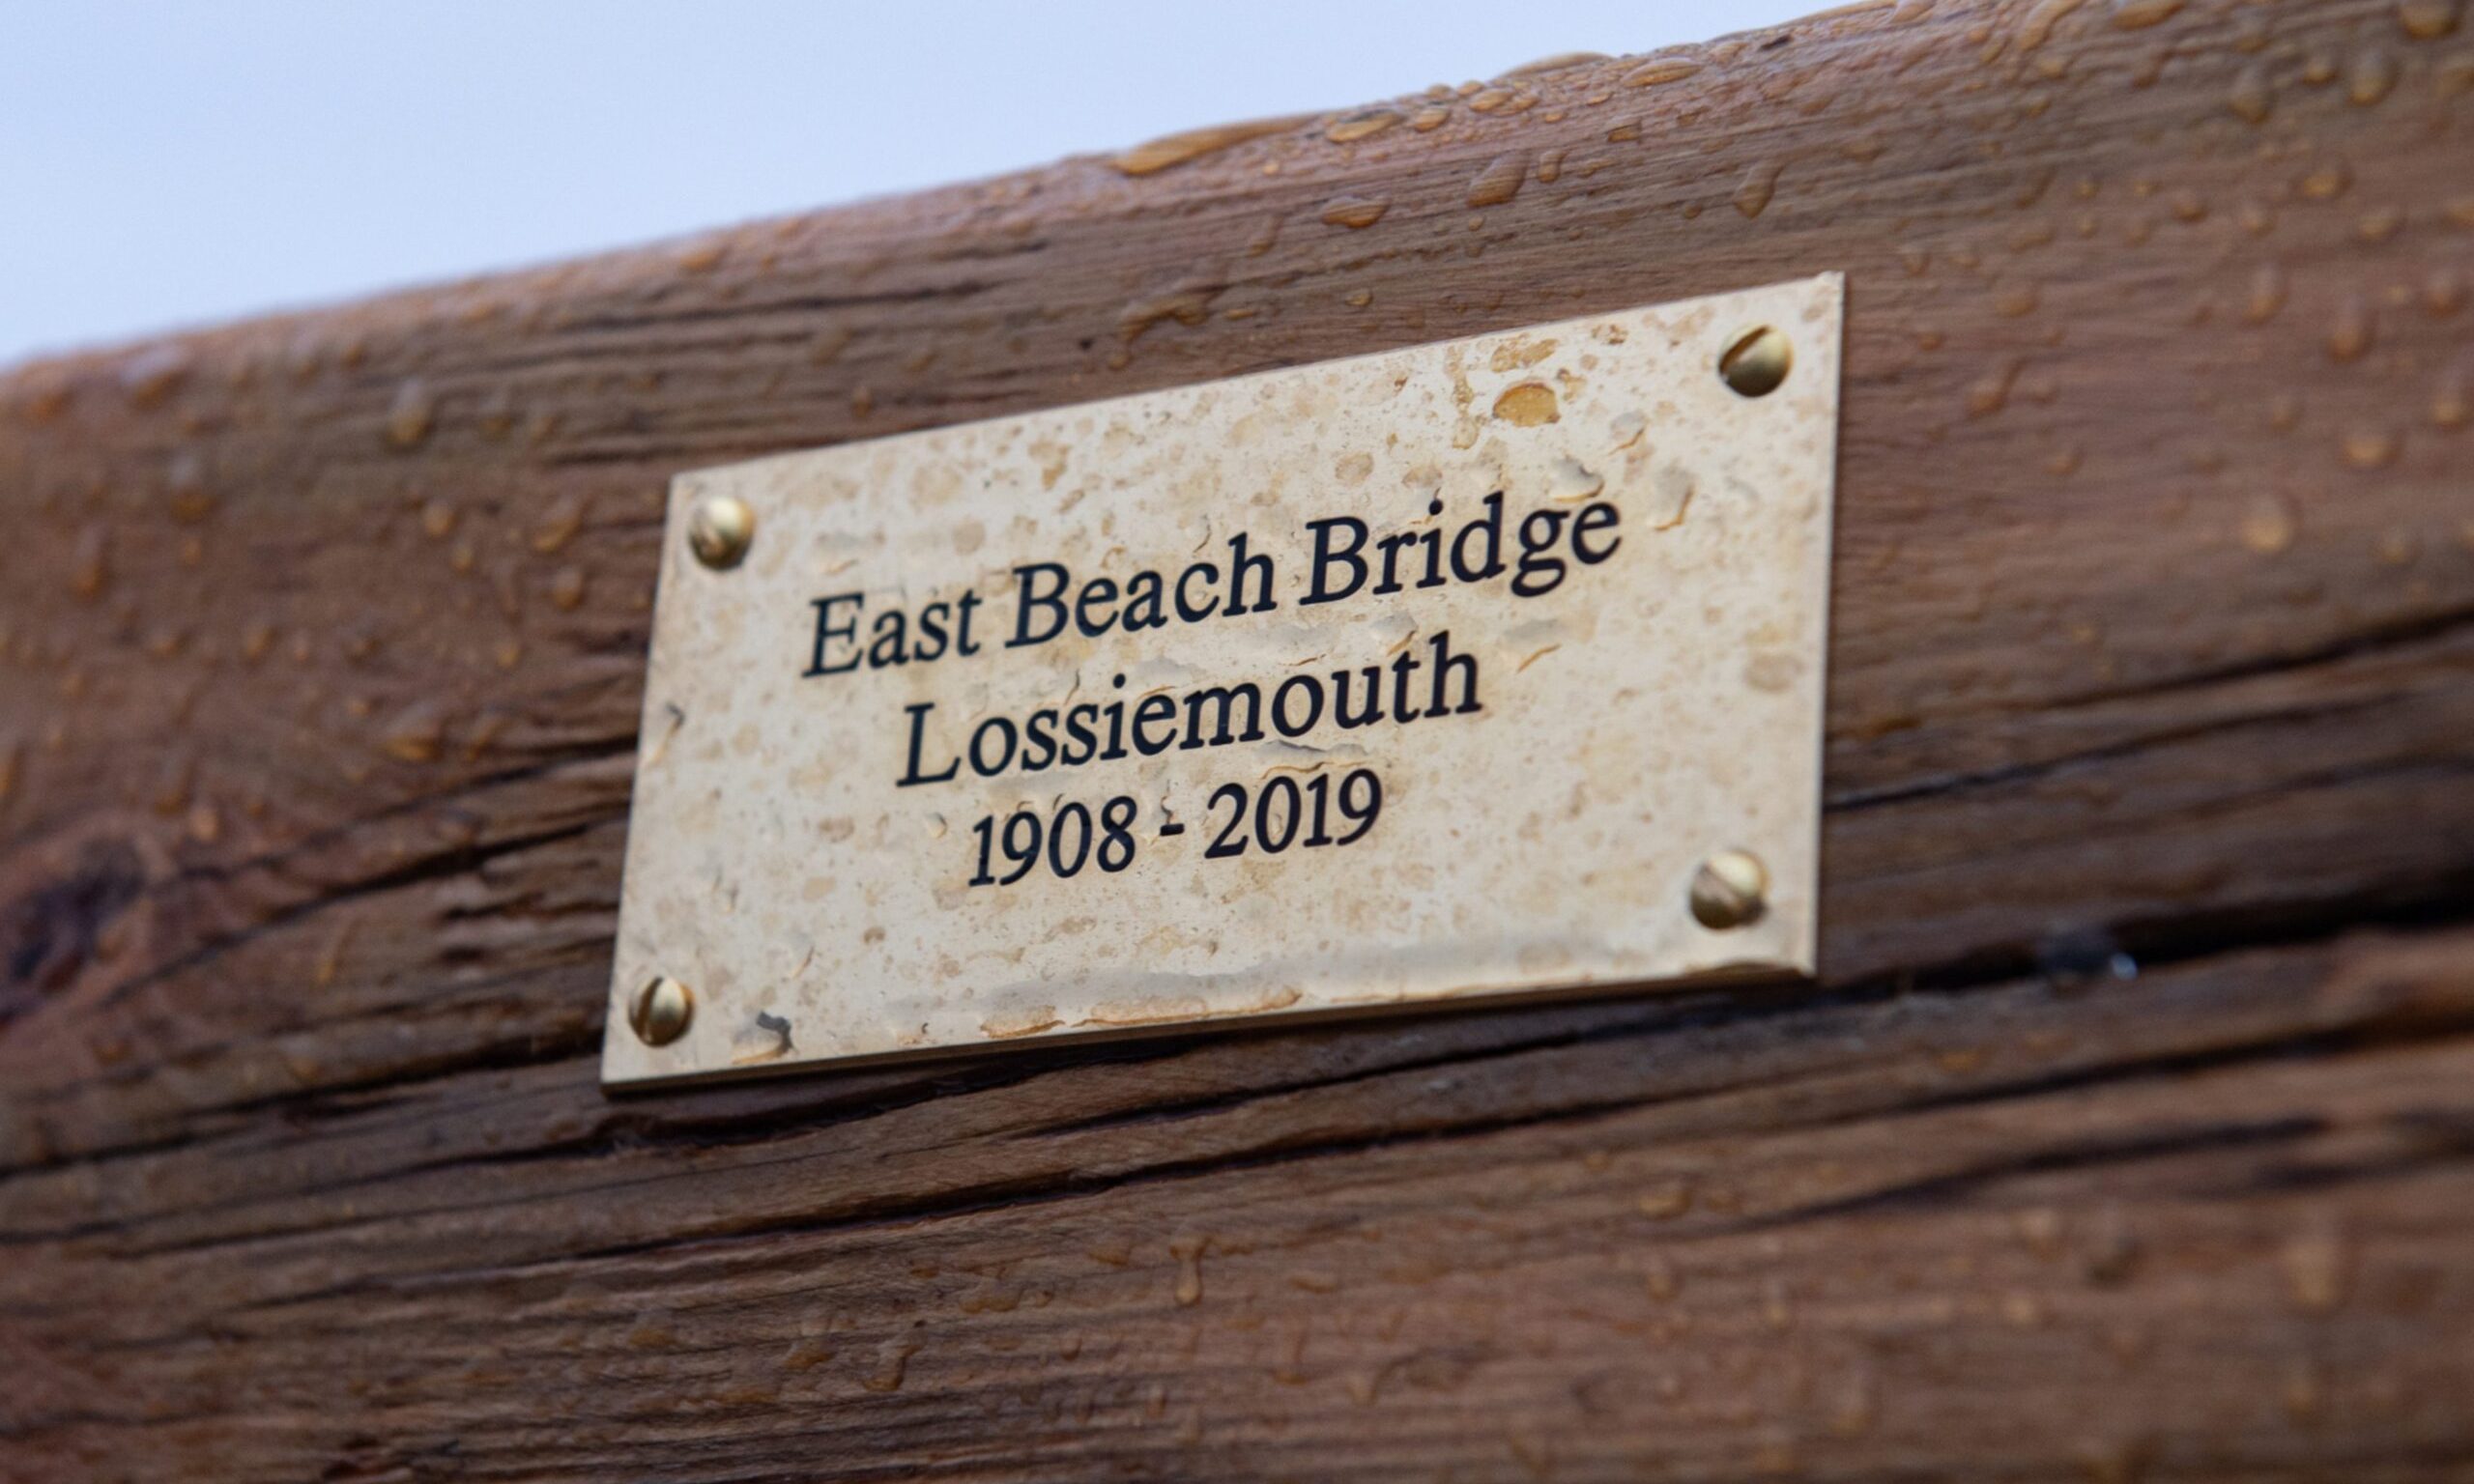 Plaque on bench reaching "East Beach Bridge Lossiemouth 1908 - 2019". 